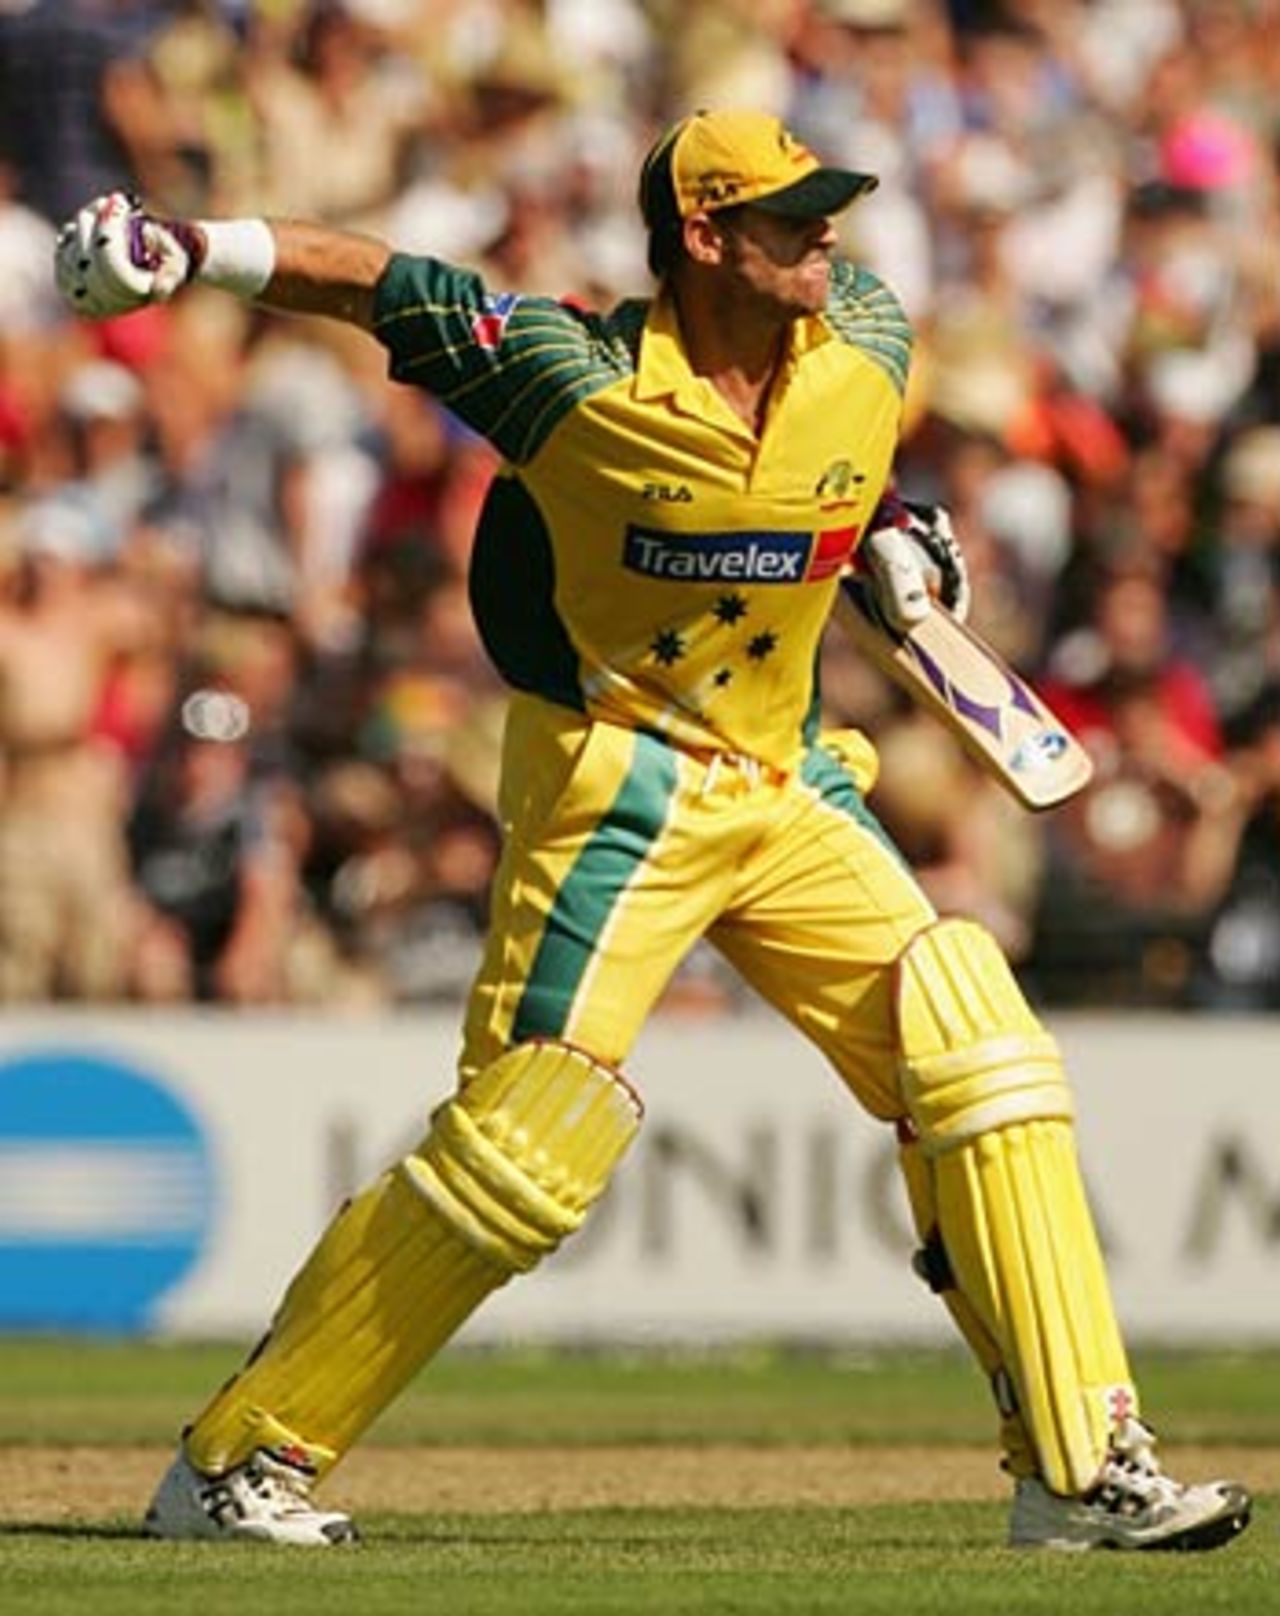 Matthew Hayden celebrates his hundred, New Zealand v Australia, 2nd ODI, Christchurch, February 22, 2005